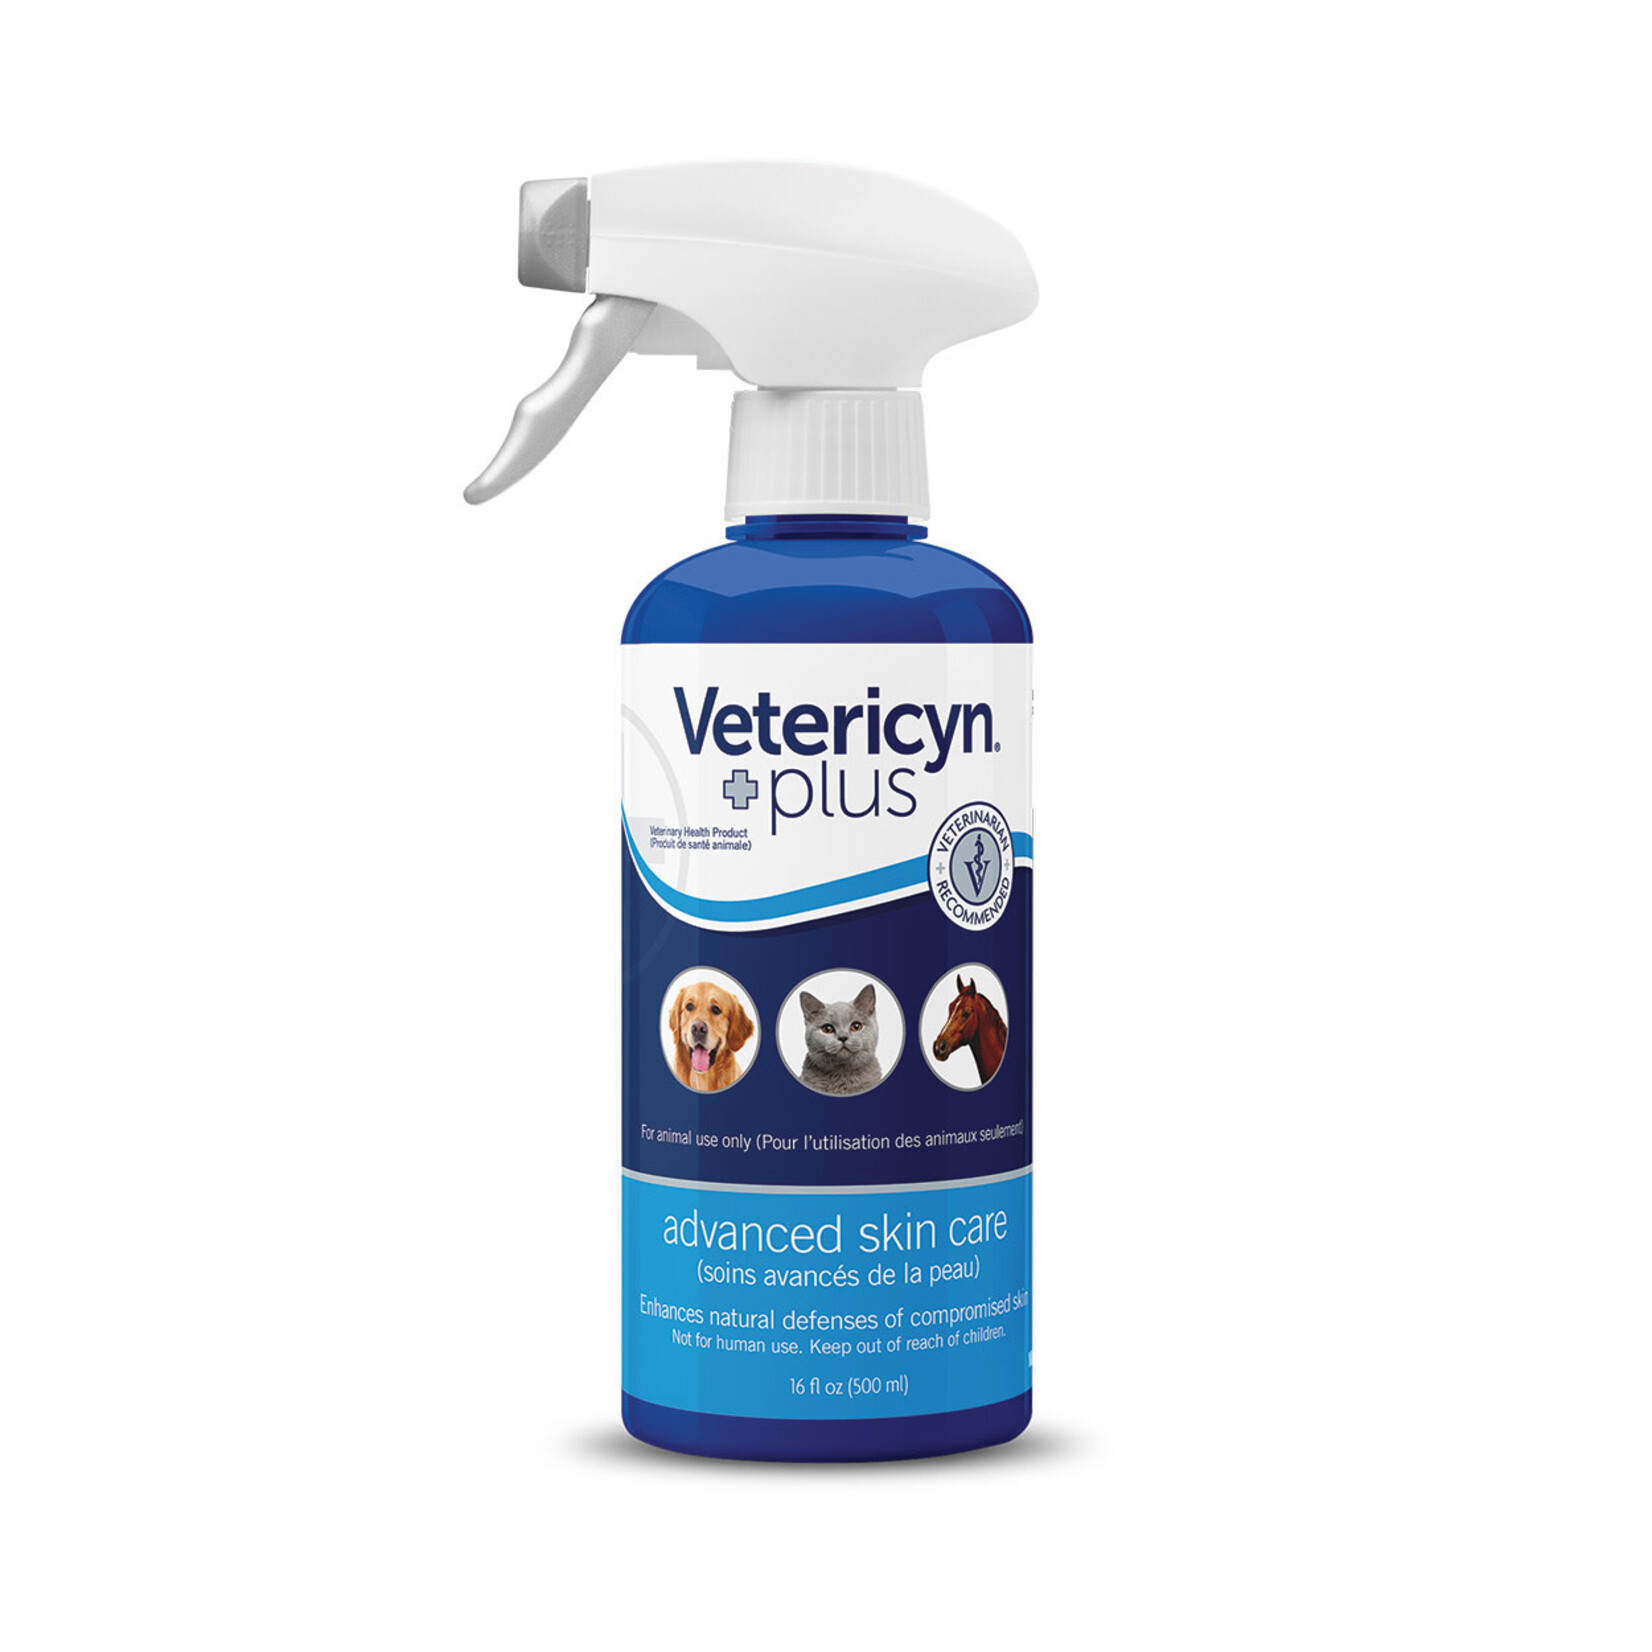 VETERICYN Vetericyn Plus Advanced Skin Care Spray - 16 fl oz